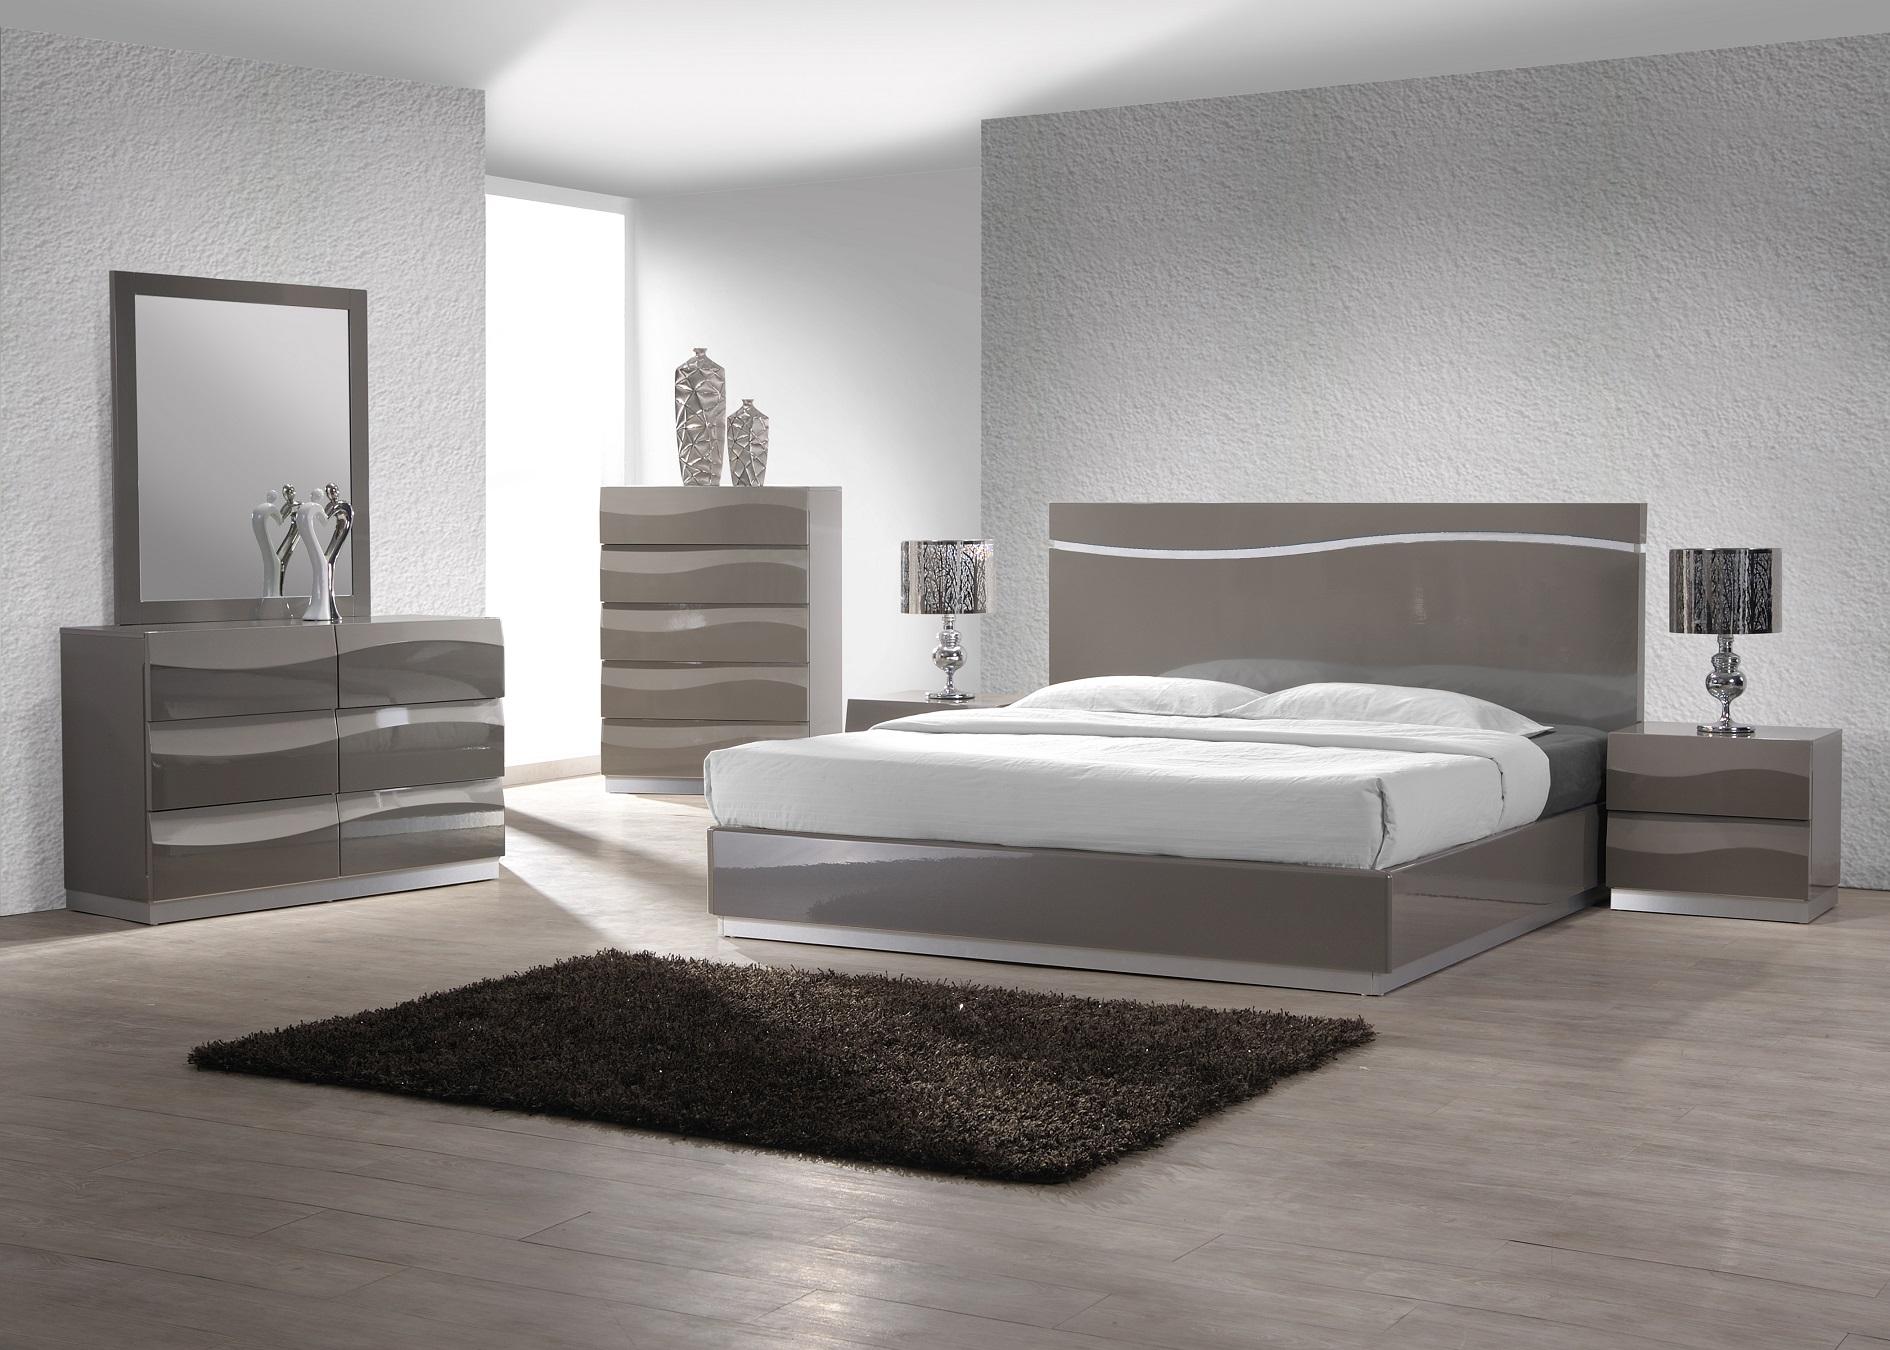 

    
DELHI-KING-2N-3PC Gloss Grey Finish Platform King Size Bedroom Set 3Pcs Delhi by Chintaly Imports
